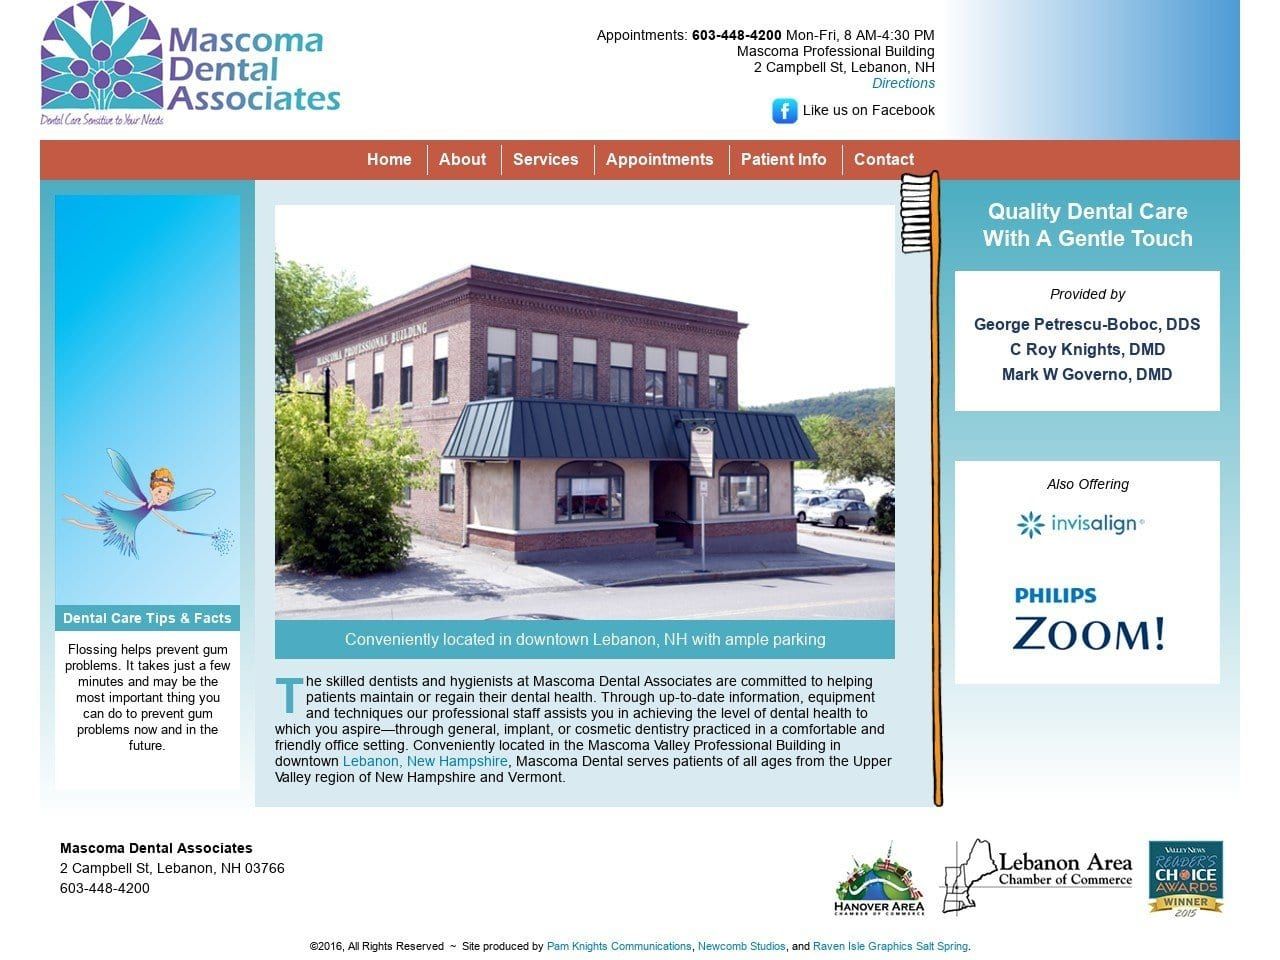 Mascoma Dental Associates Website Screenshot from mascomadental.com